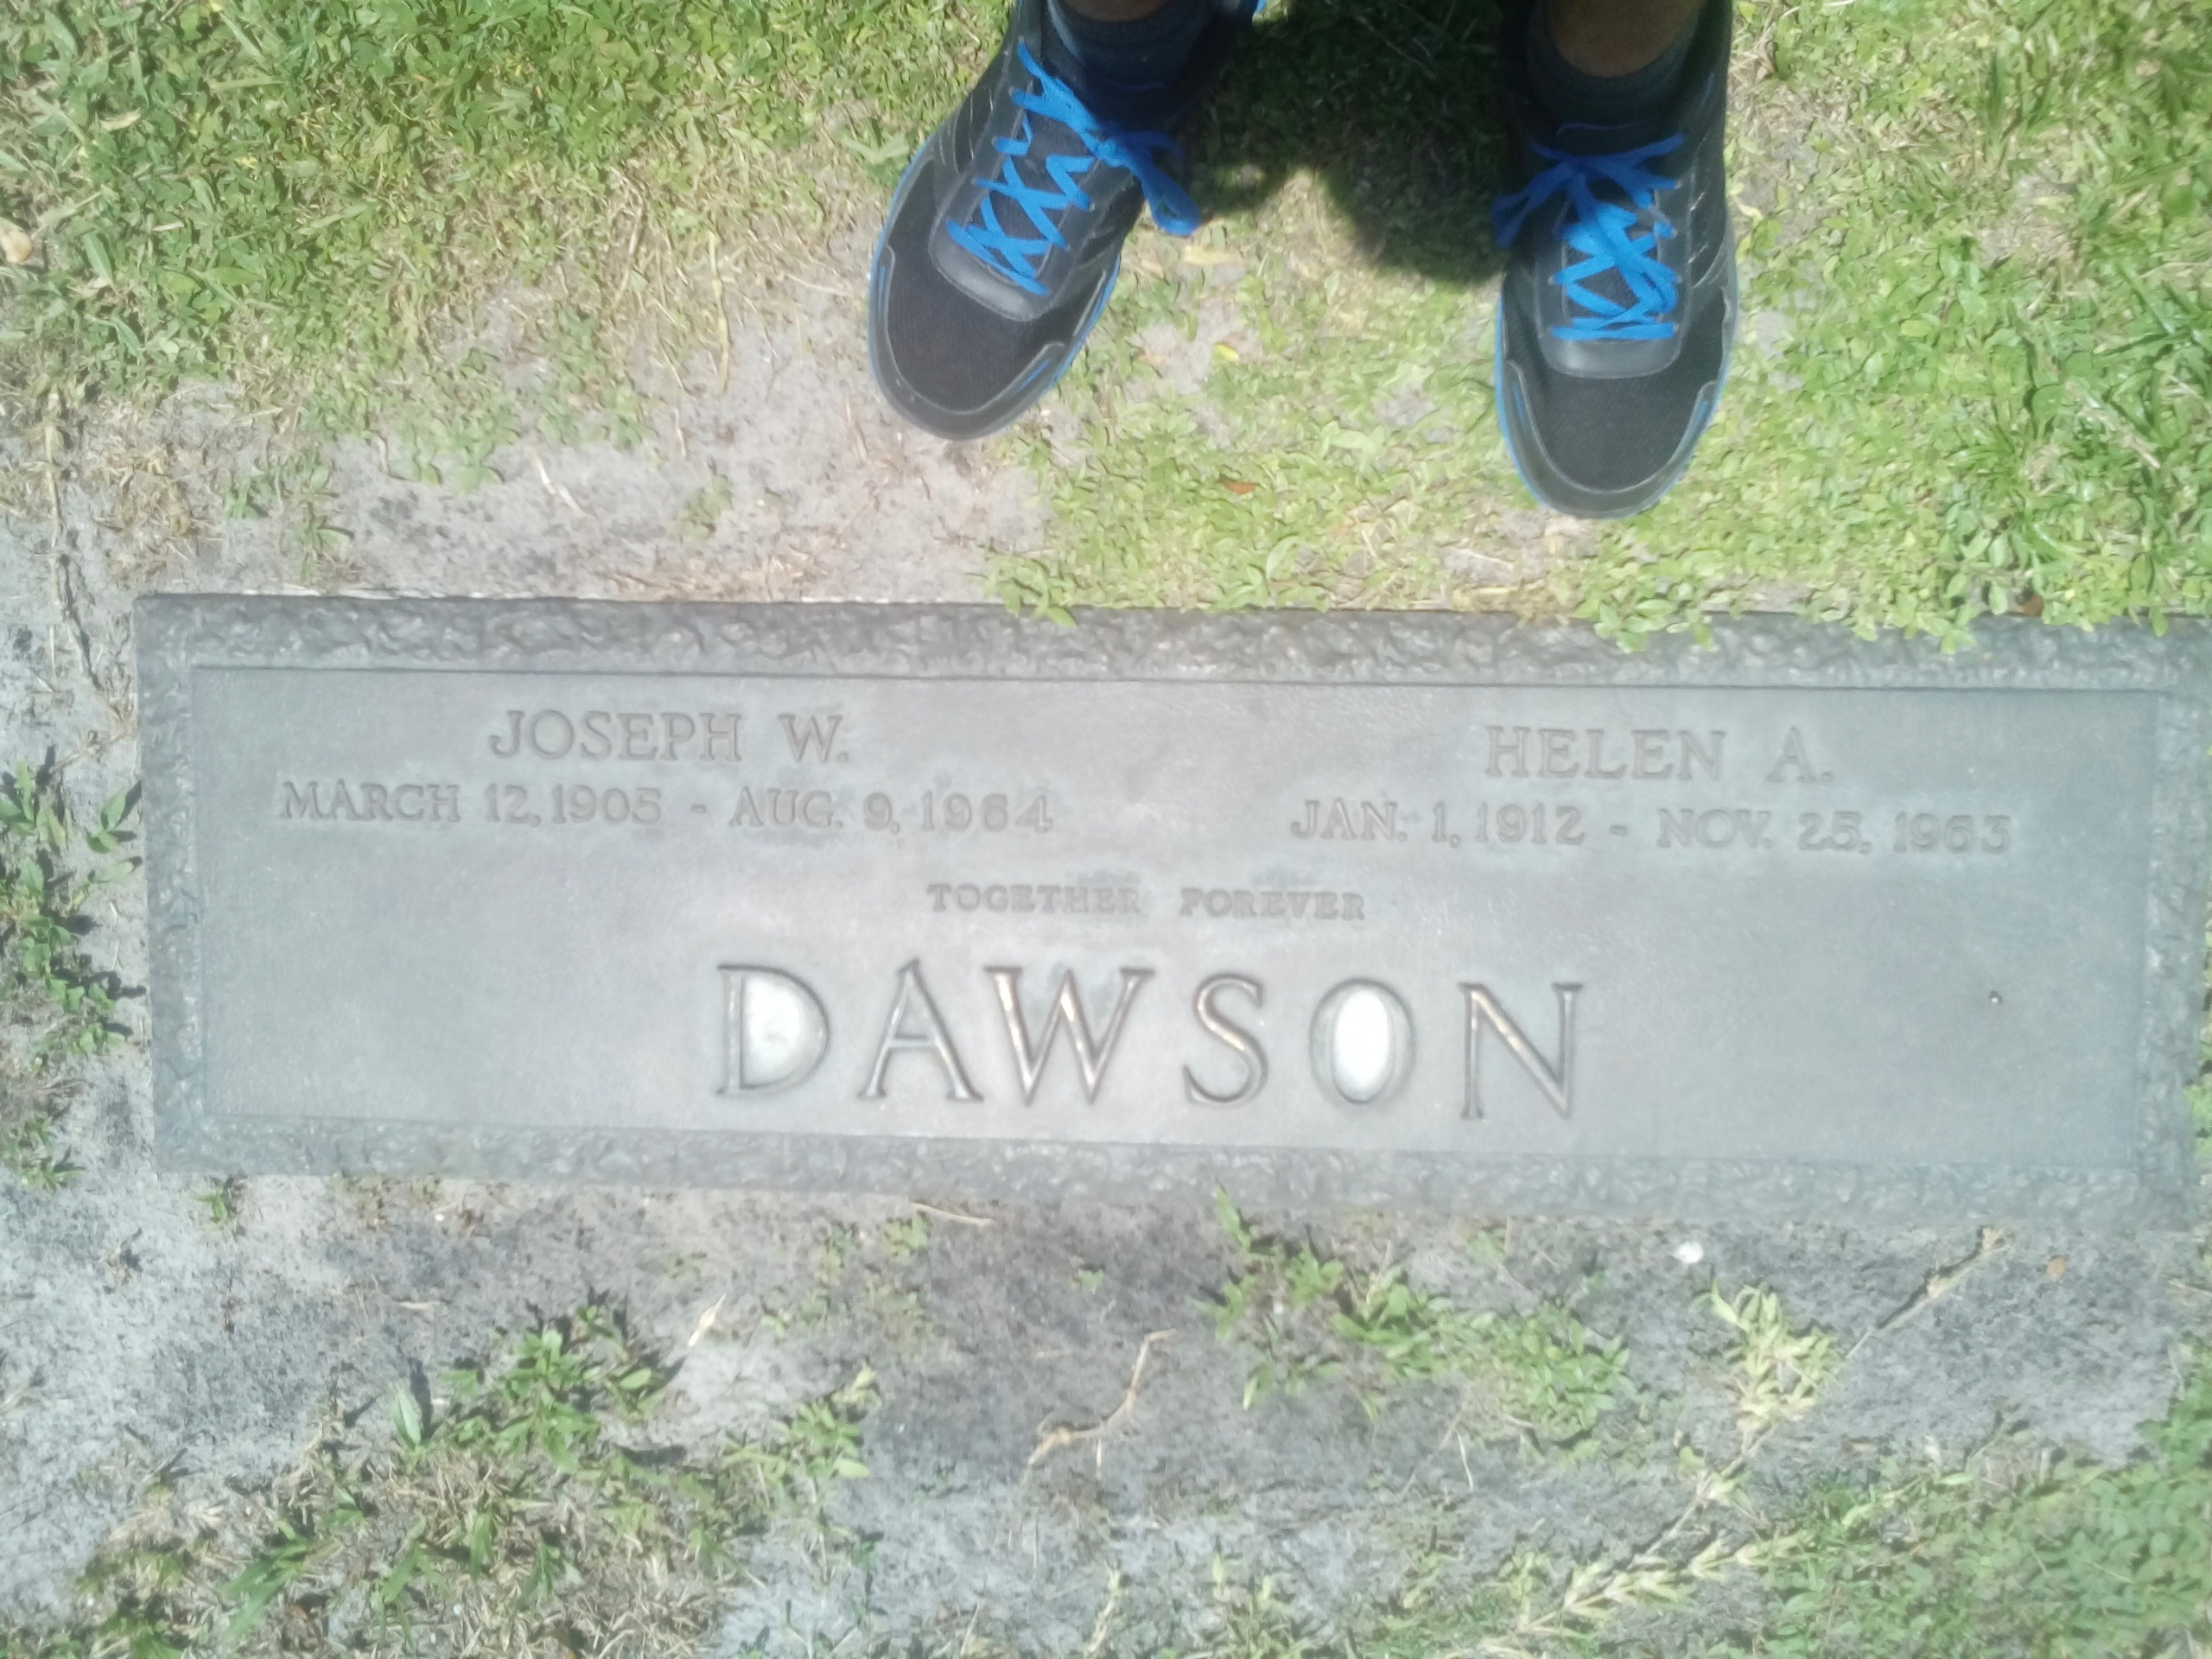 Helen A Dawson